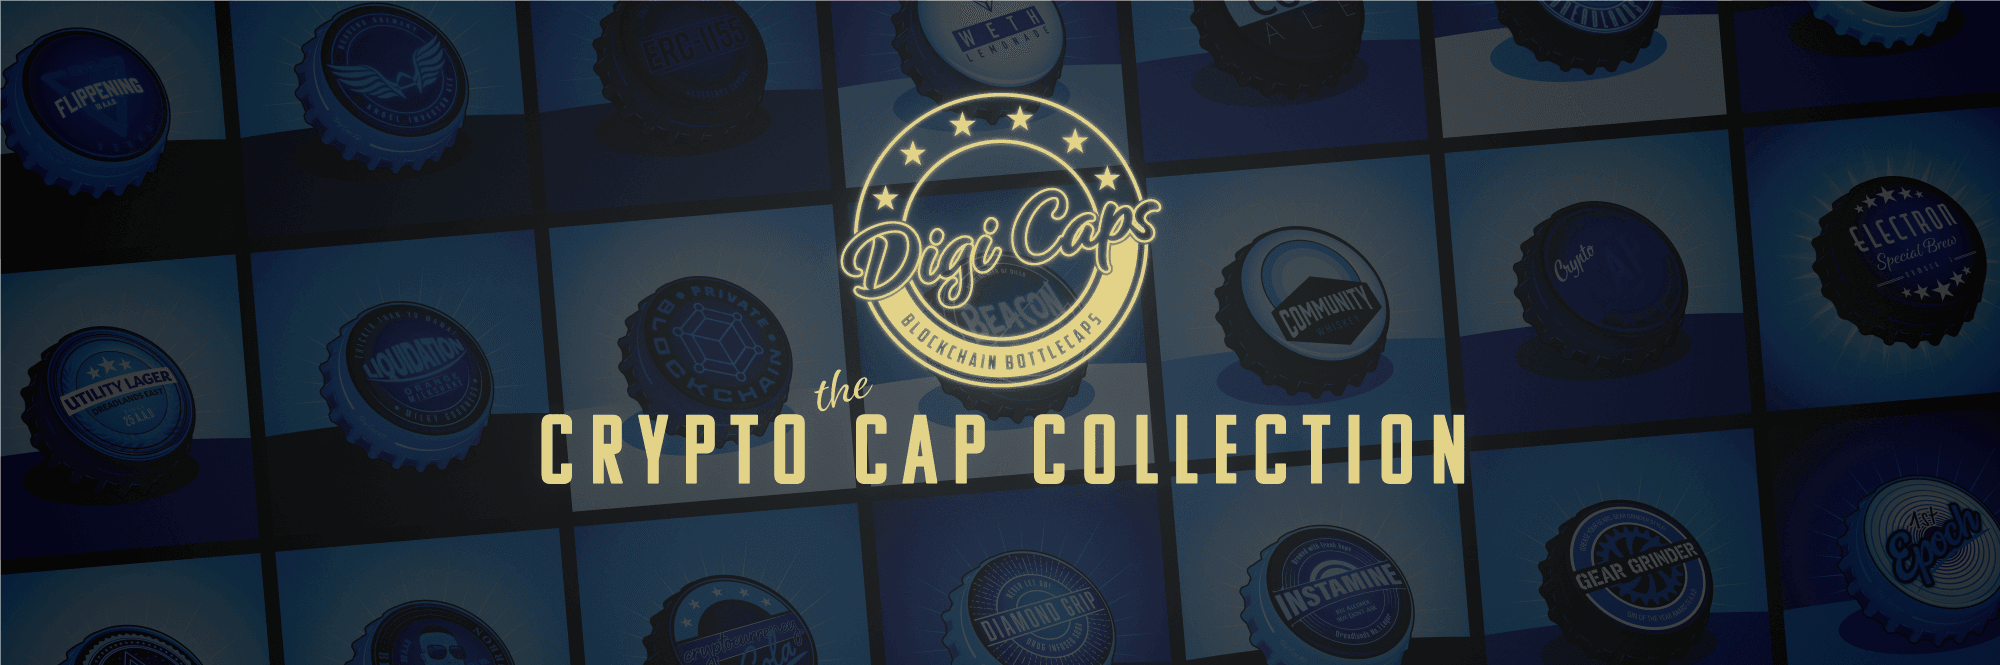 The Crypto Cap Collection